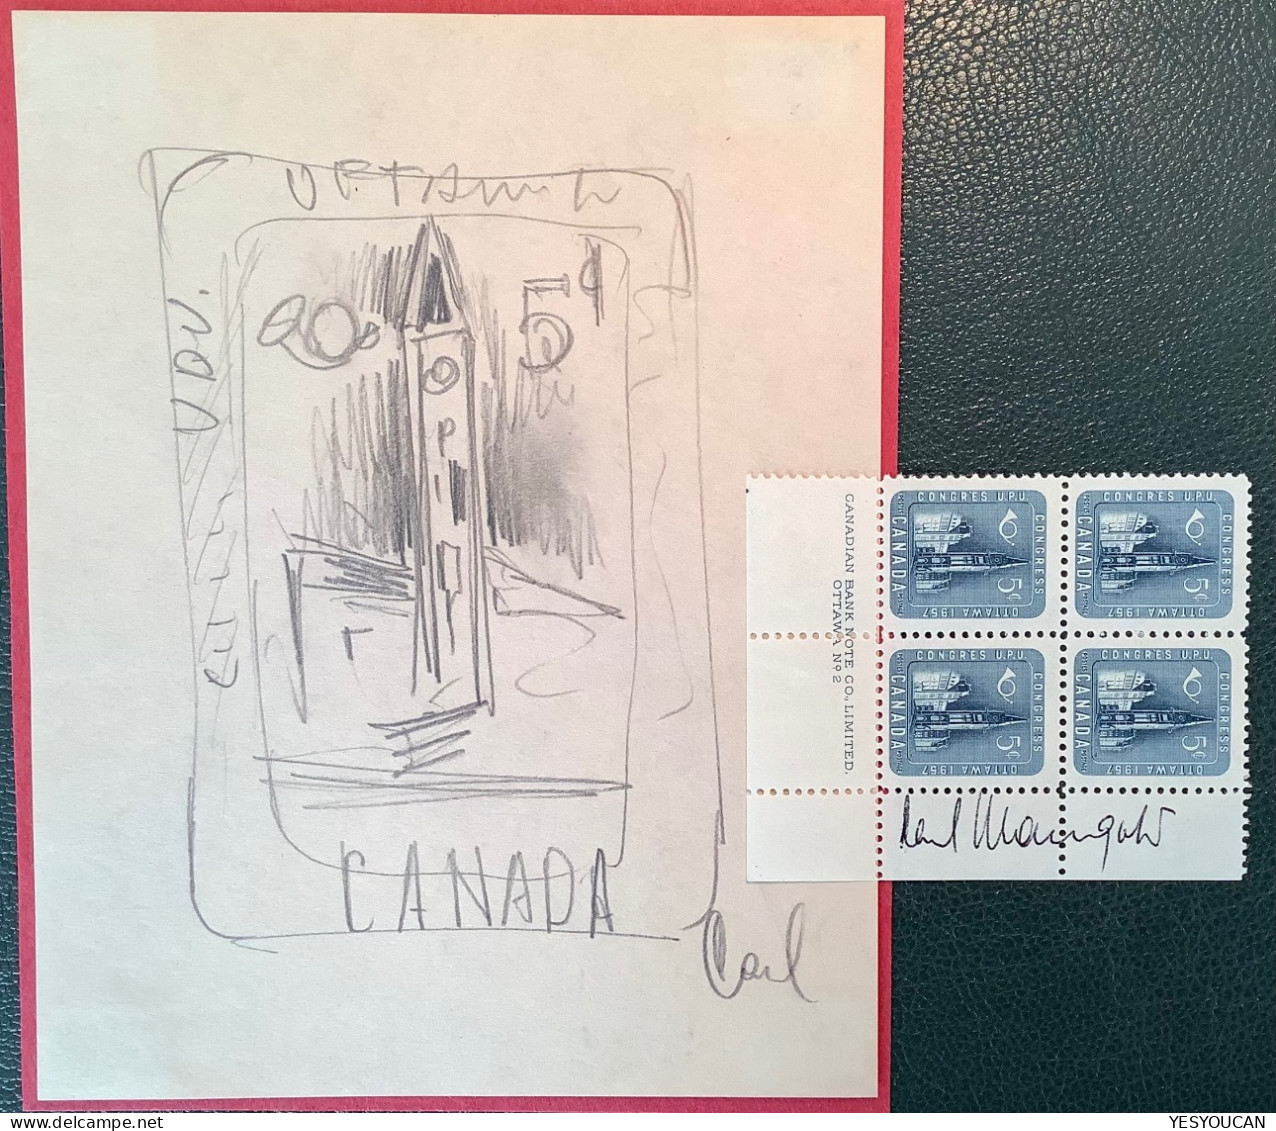 Canada Hand-drawn Essay 5c UPU CONGRESS OTTAWA 1957 Signed By Artist + Stamp, Ex Severin UPU Coll. Corinphila2012 (Proof - Ungebraucht